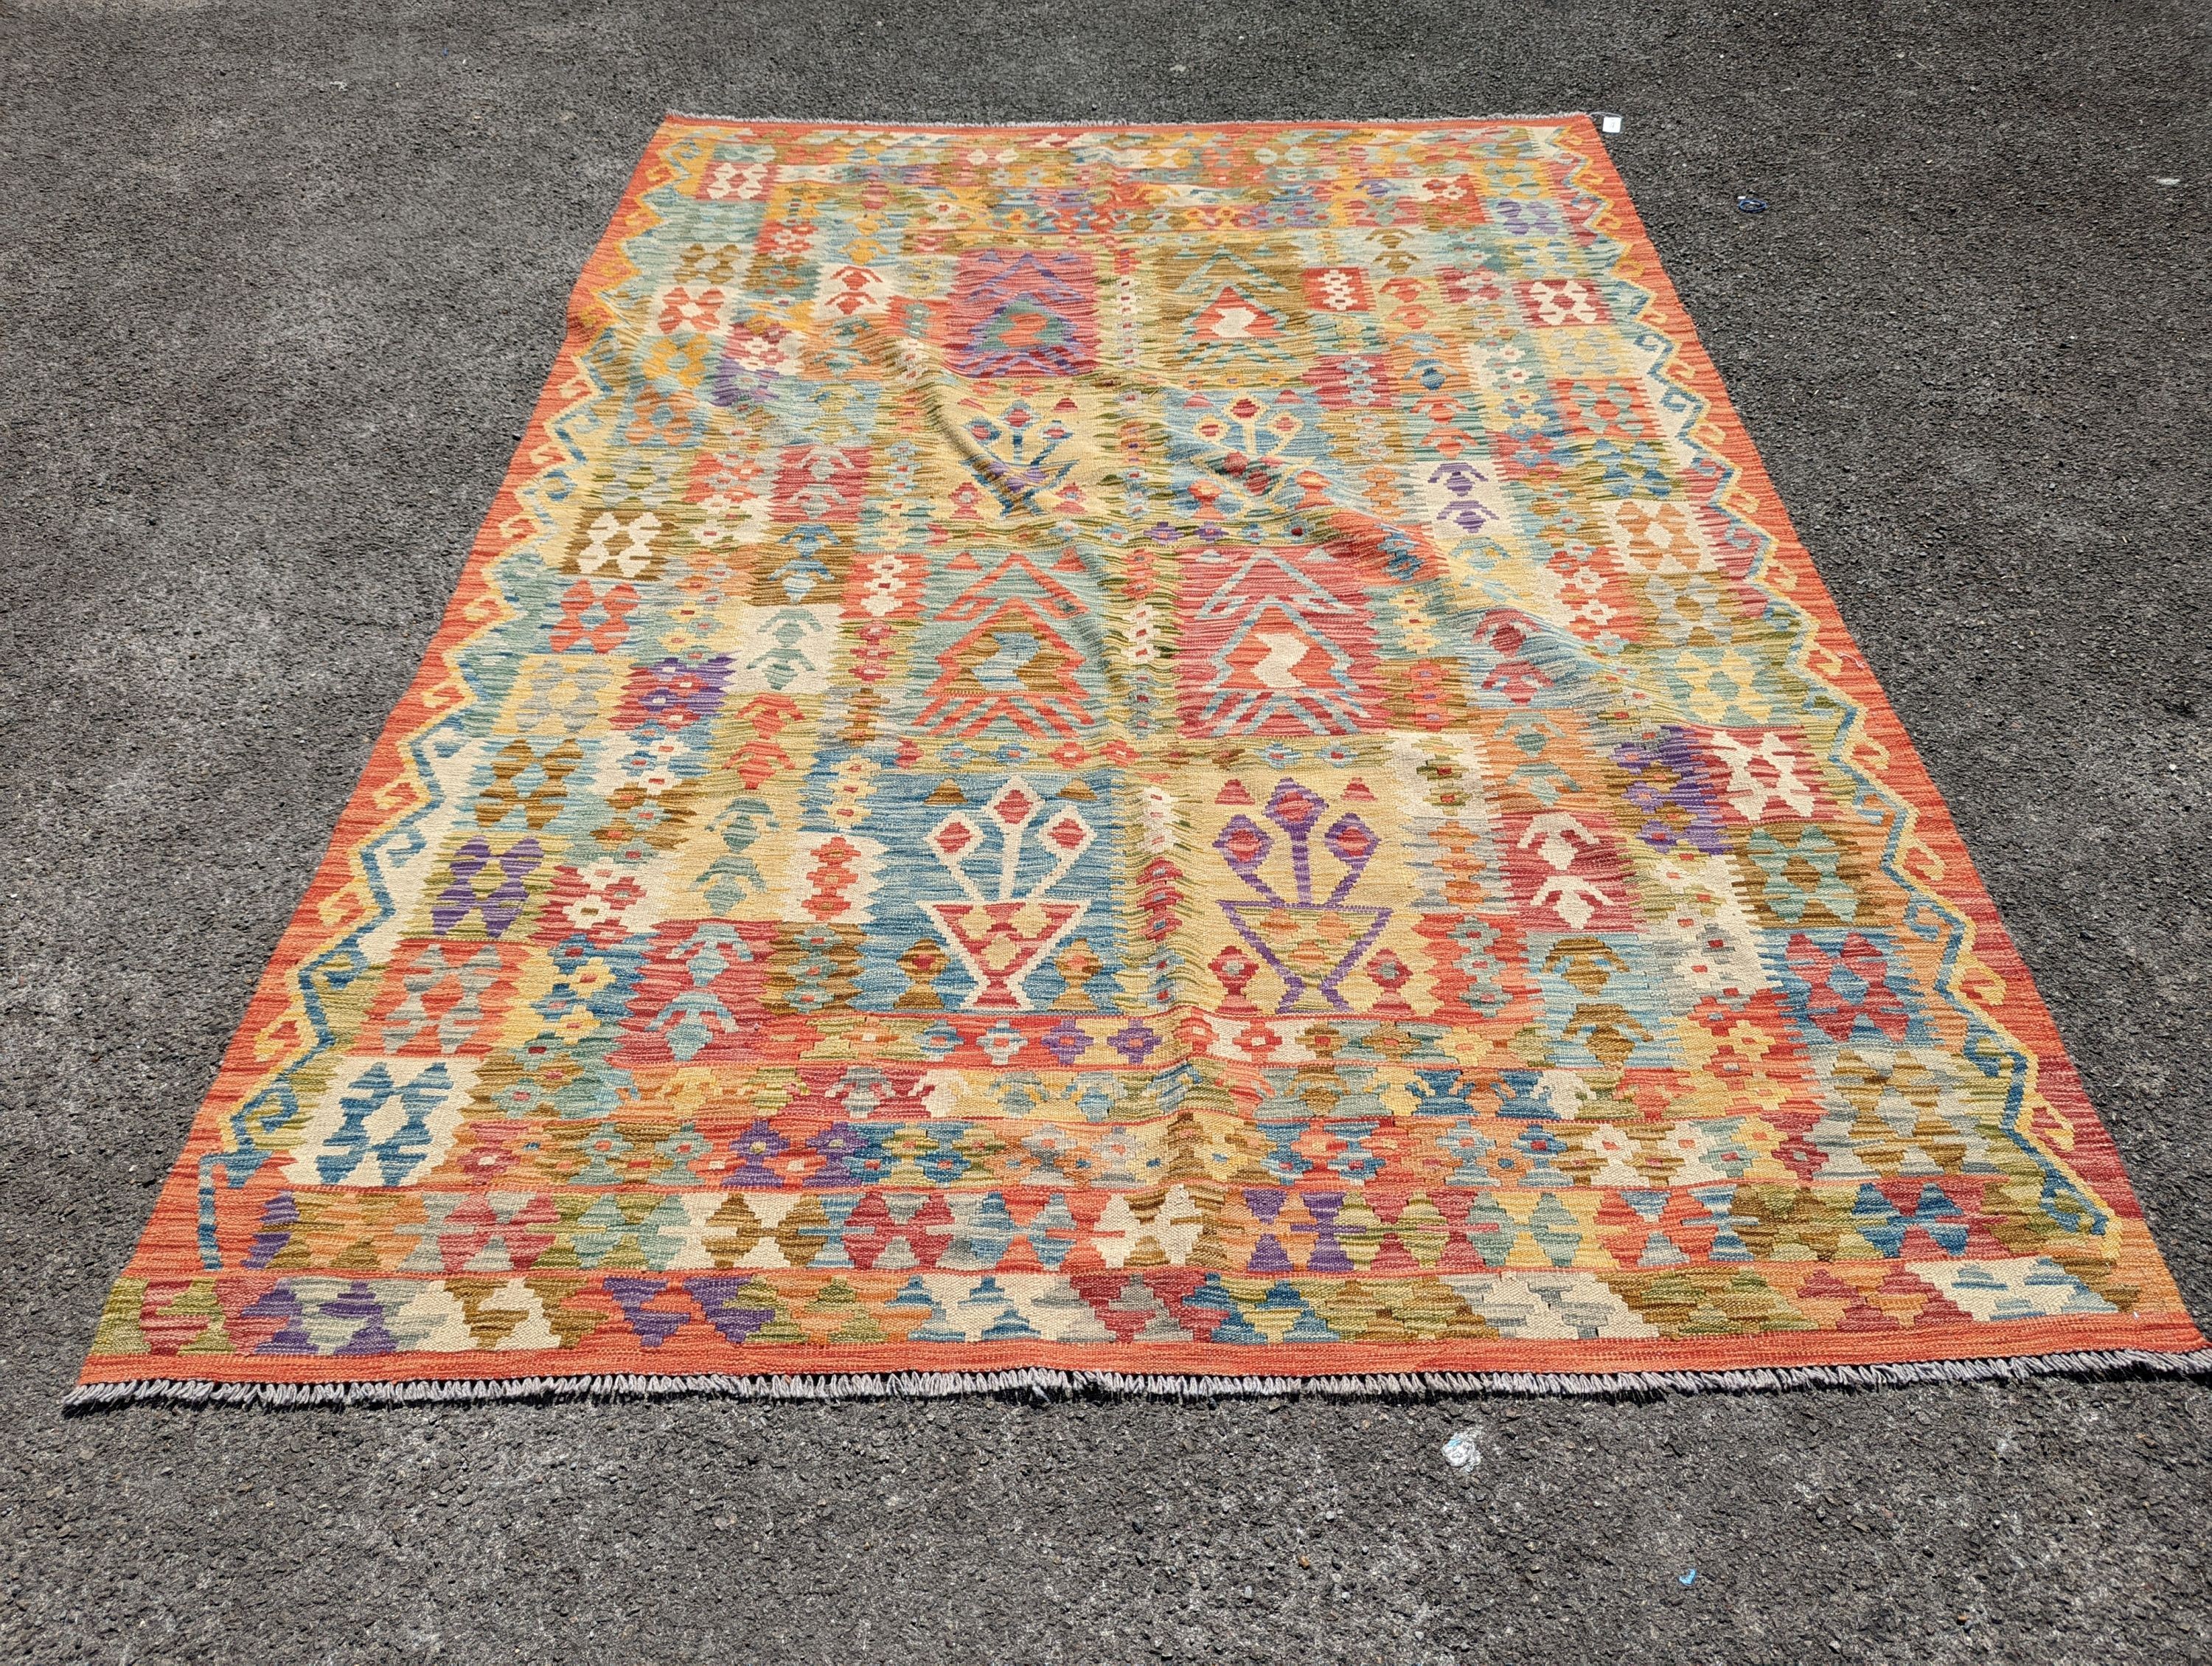 An Anatolian polychrome geometric flatweave Kilim carpet, 290 x 210cm